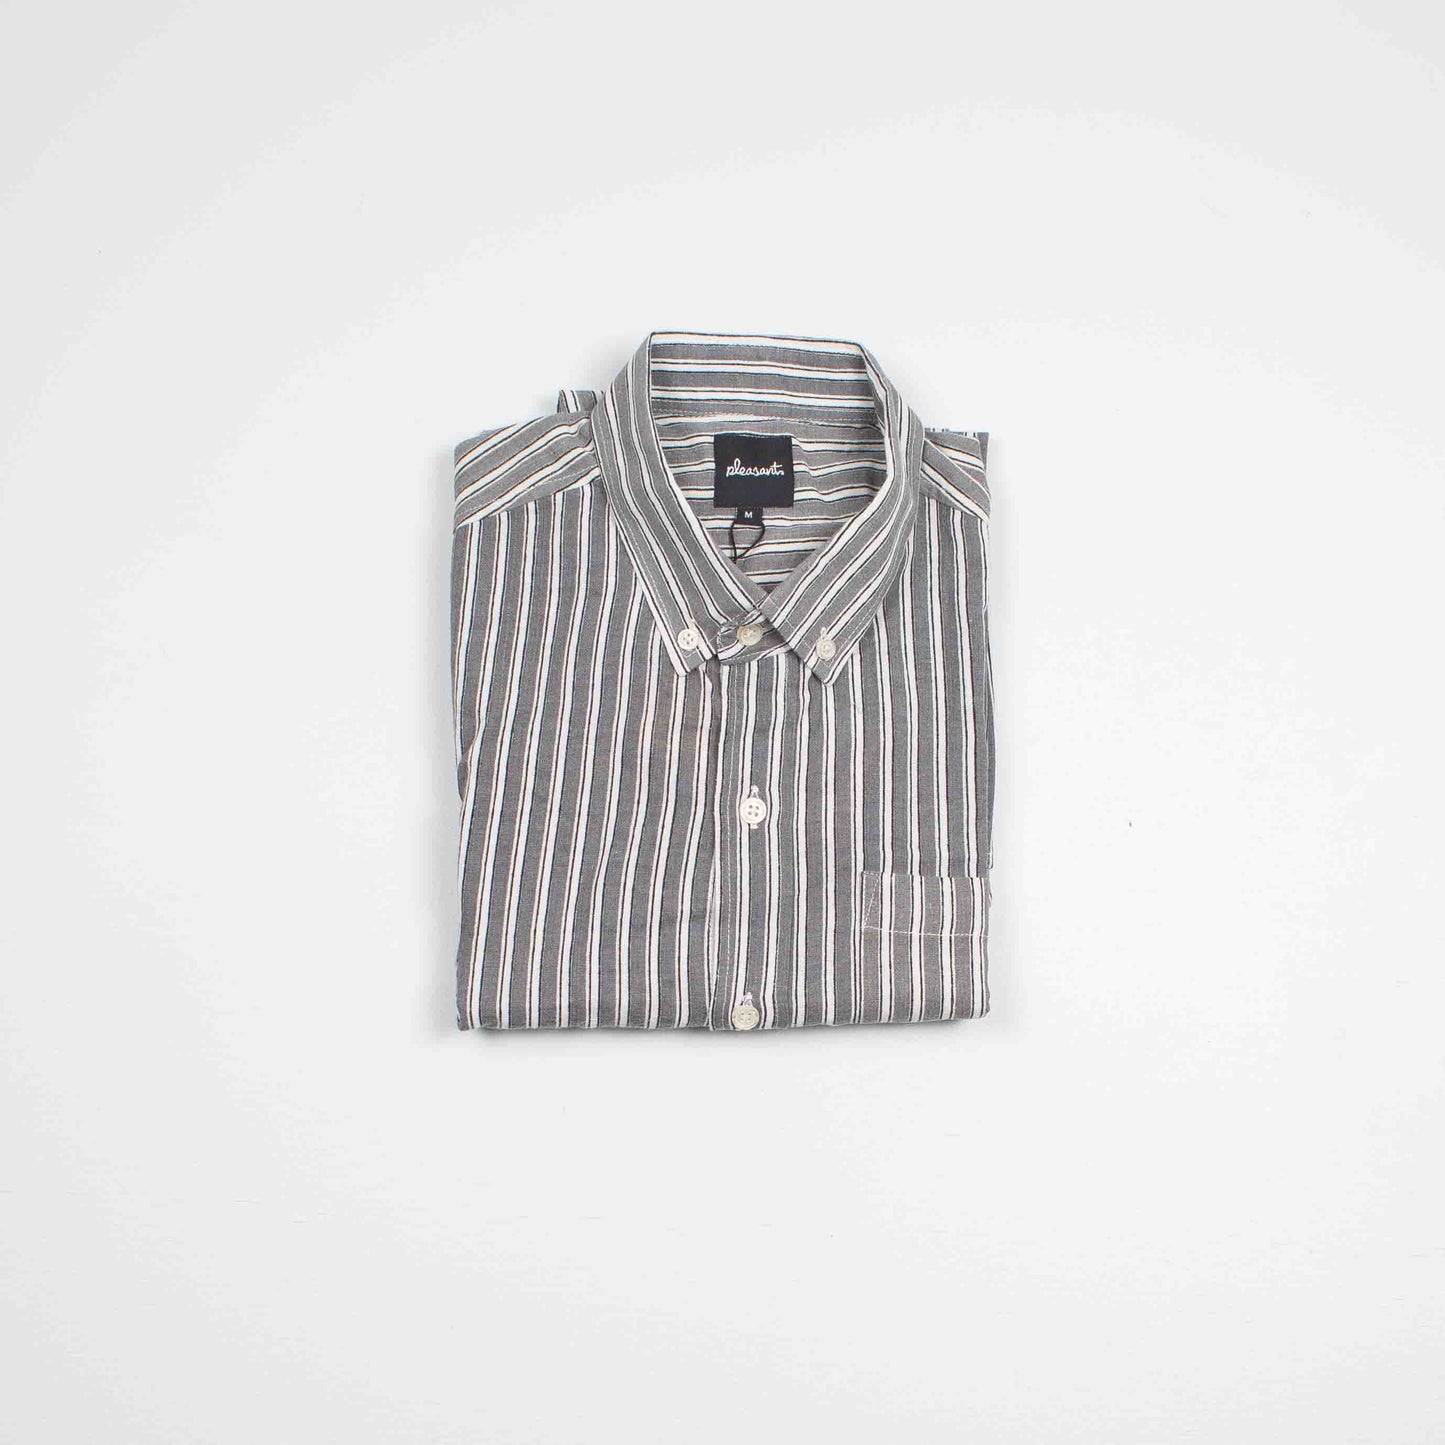 Grey Striped Upcycled Shirt